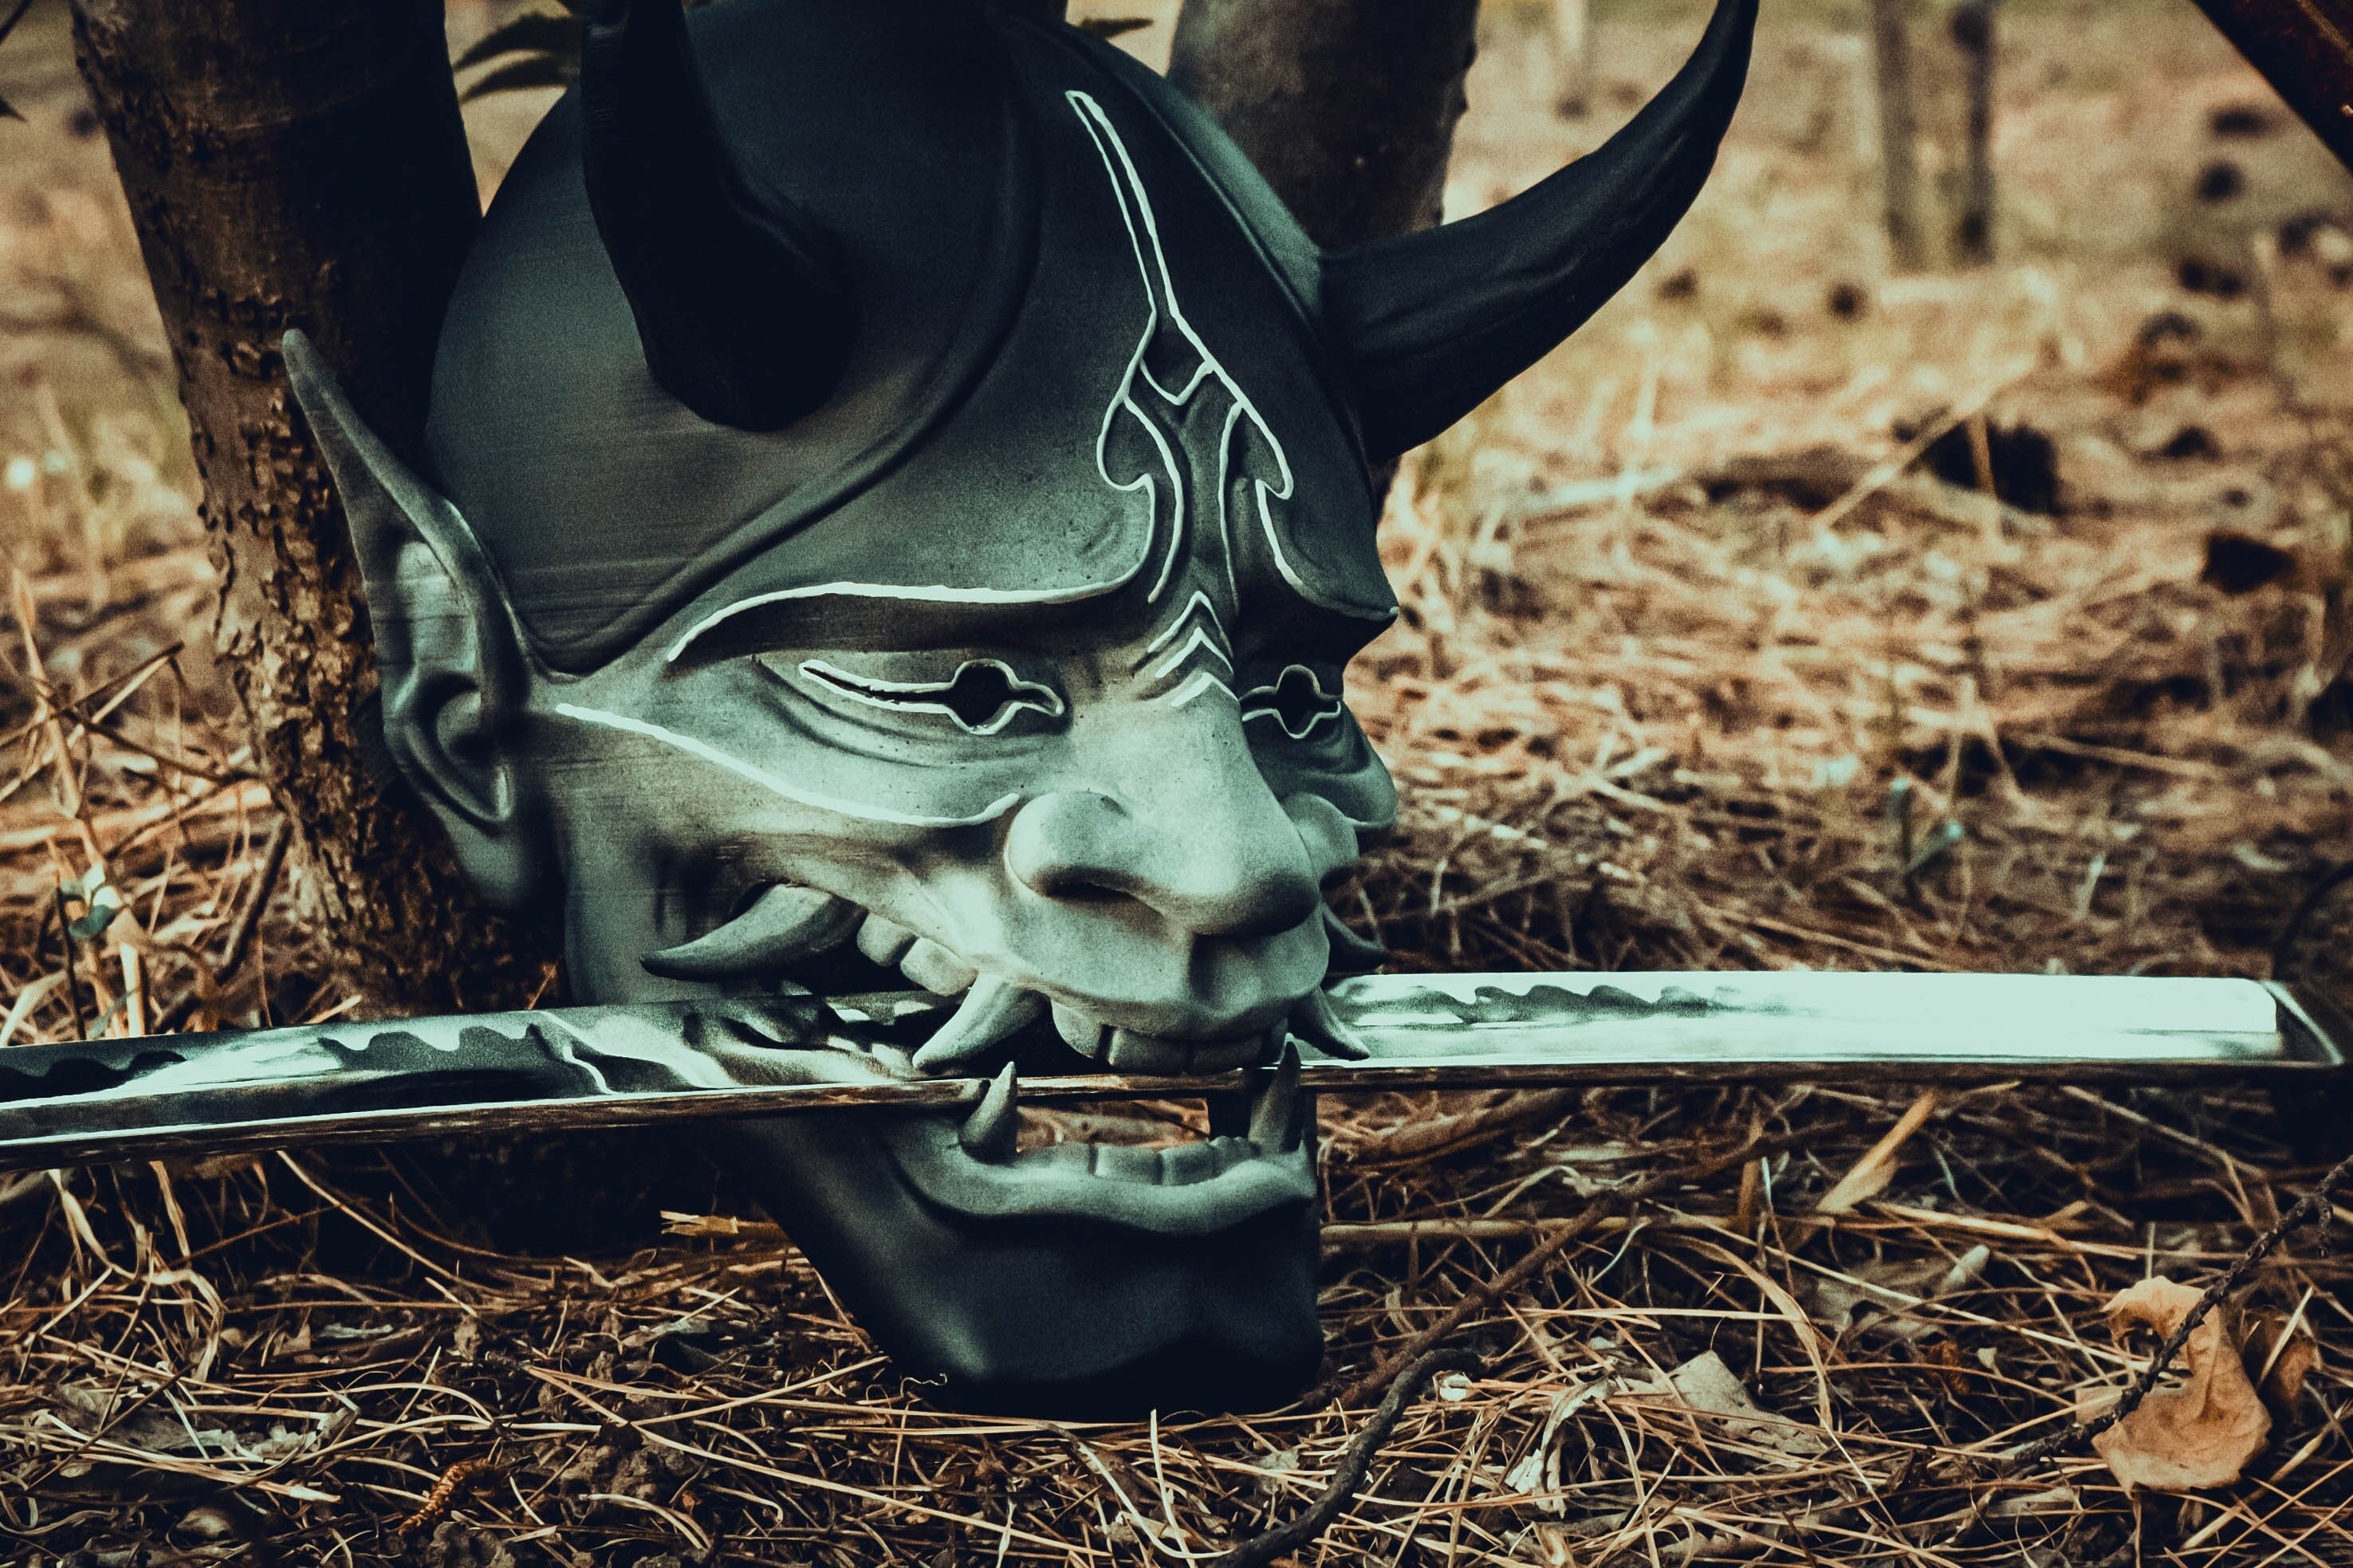 Oni Half Face Wearable Mempo Mask, Japanese Samurai Cosplay Steelish Black Half  Face Mask, Ninja Armour, Youkai Half Mask With Big Fangs 